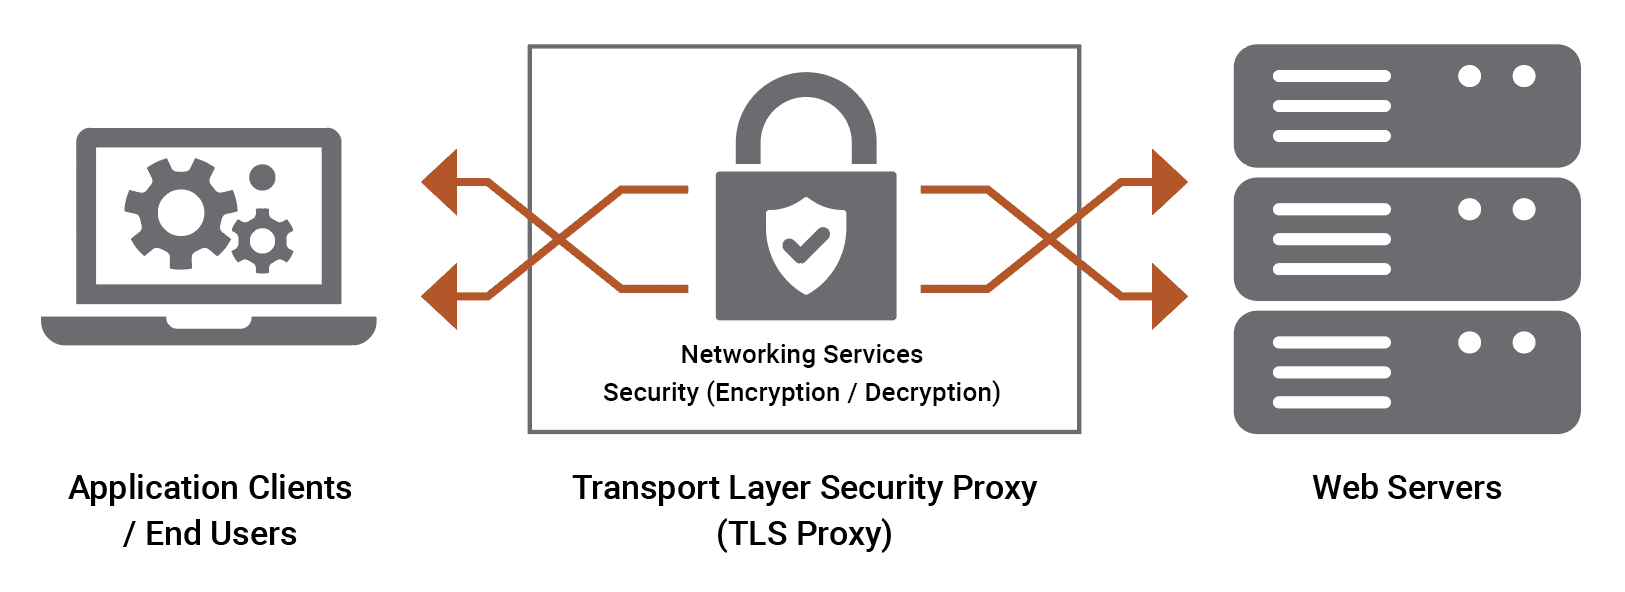 Transport Layer Security Proxy Figure